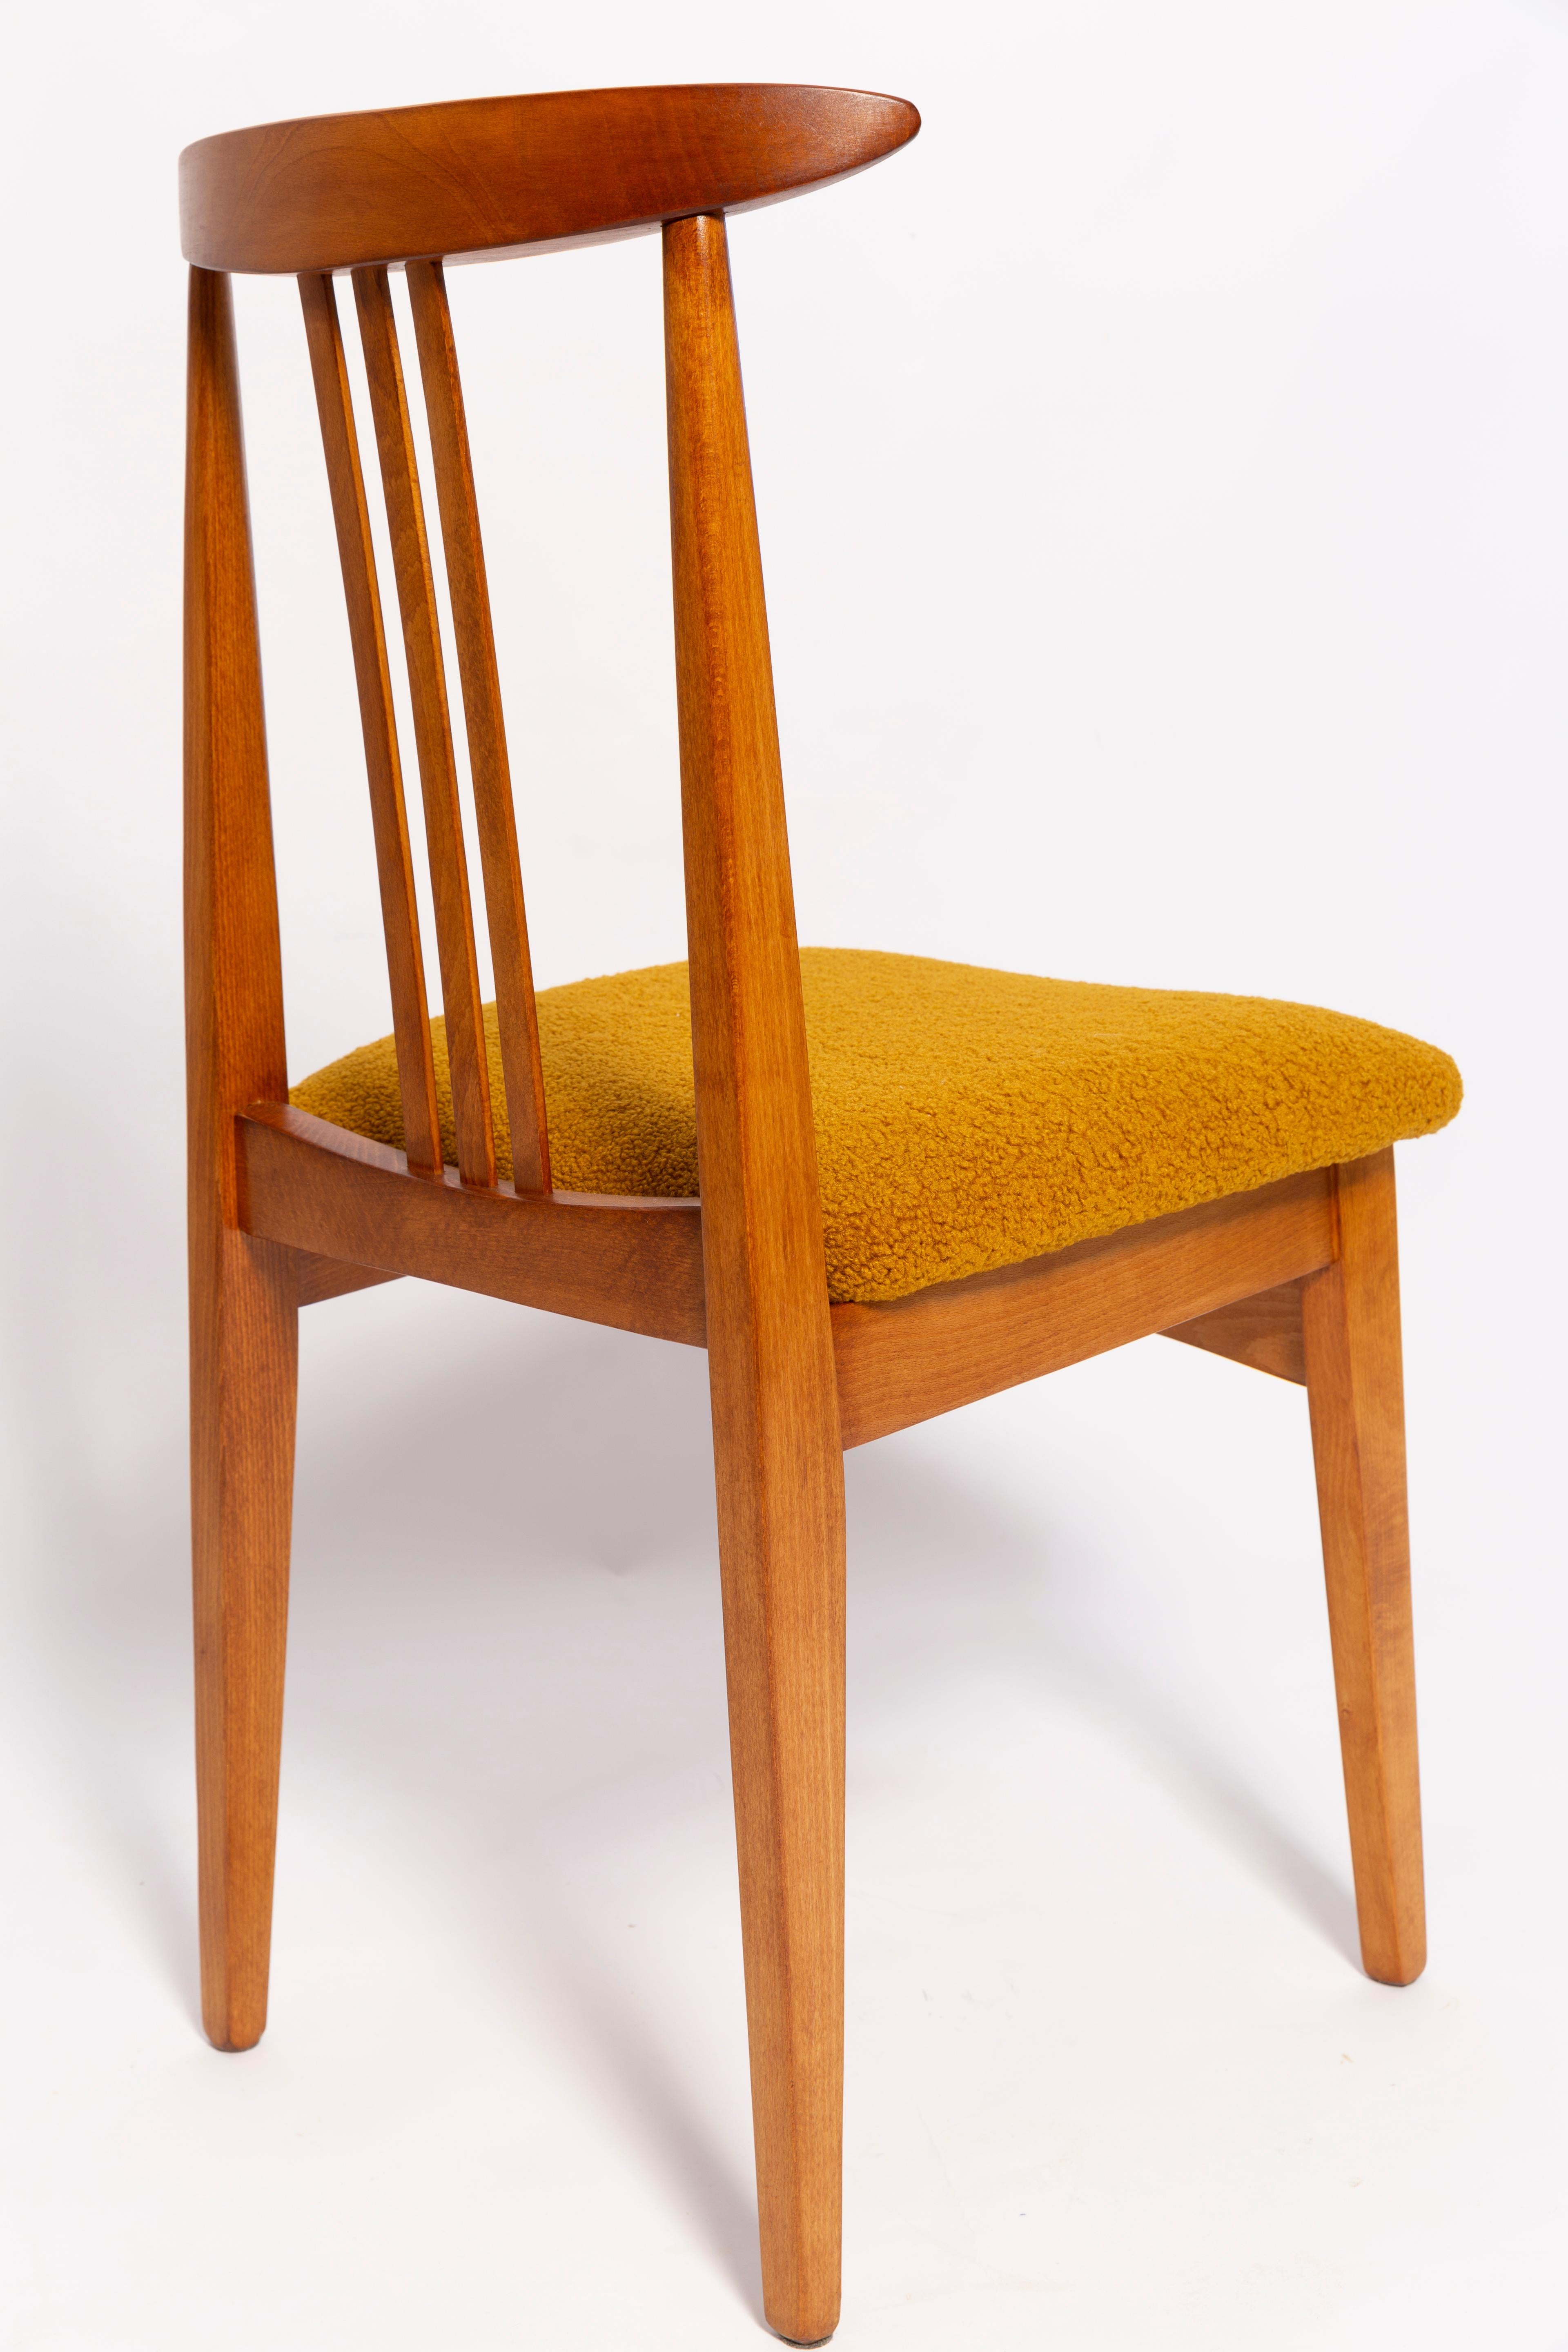 Polish Ten Mid-Century Ochre Boucle Chairs, Medium Wood, M. Zielinski, Europe, 1960s For Sale